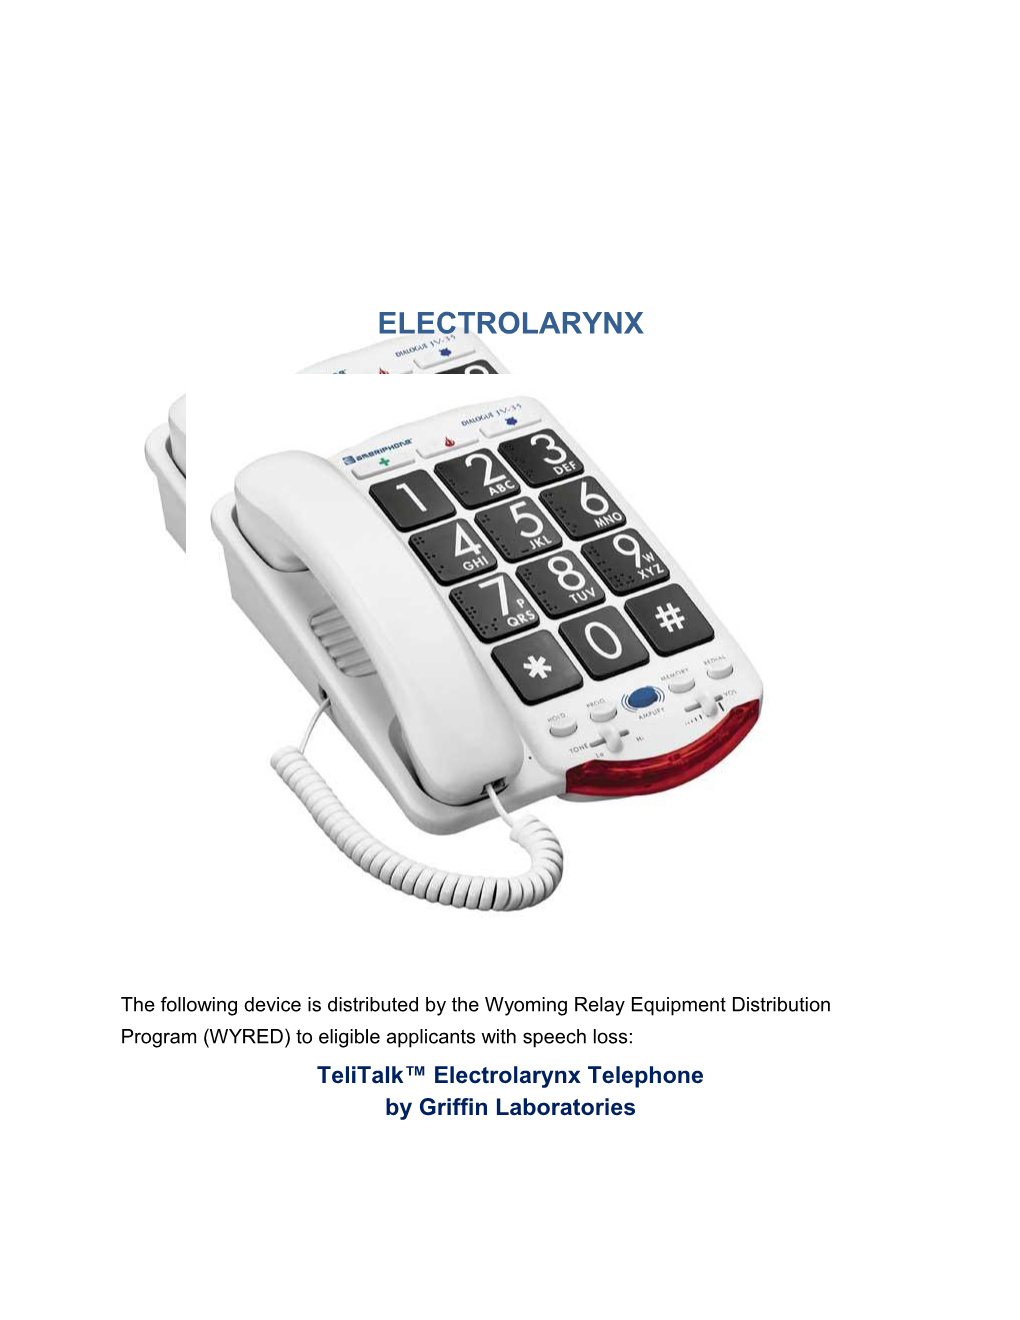 Telitalk Electrolarynx Telephone by Griffin Laboratories